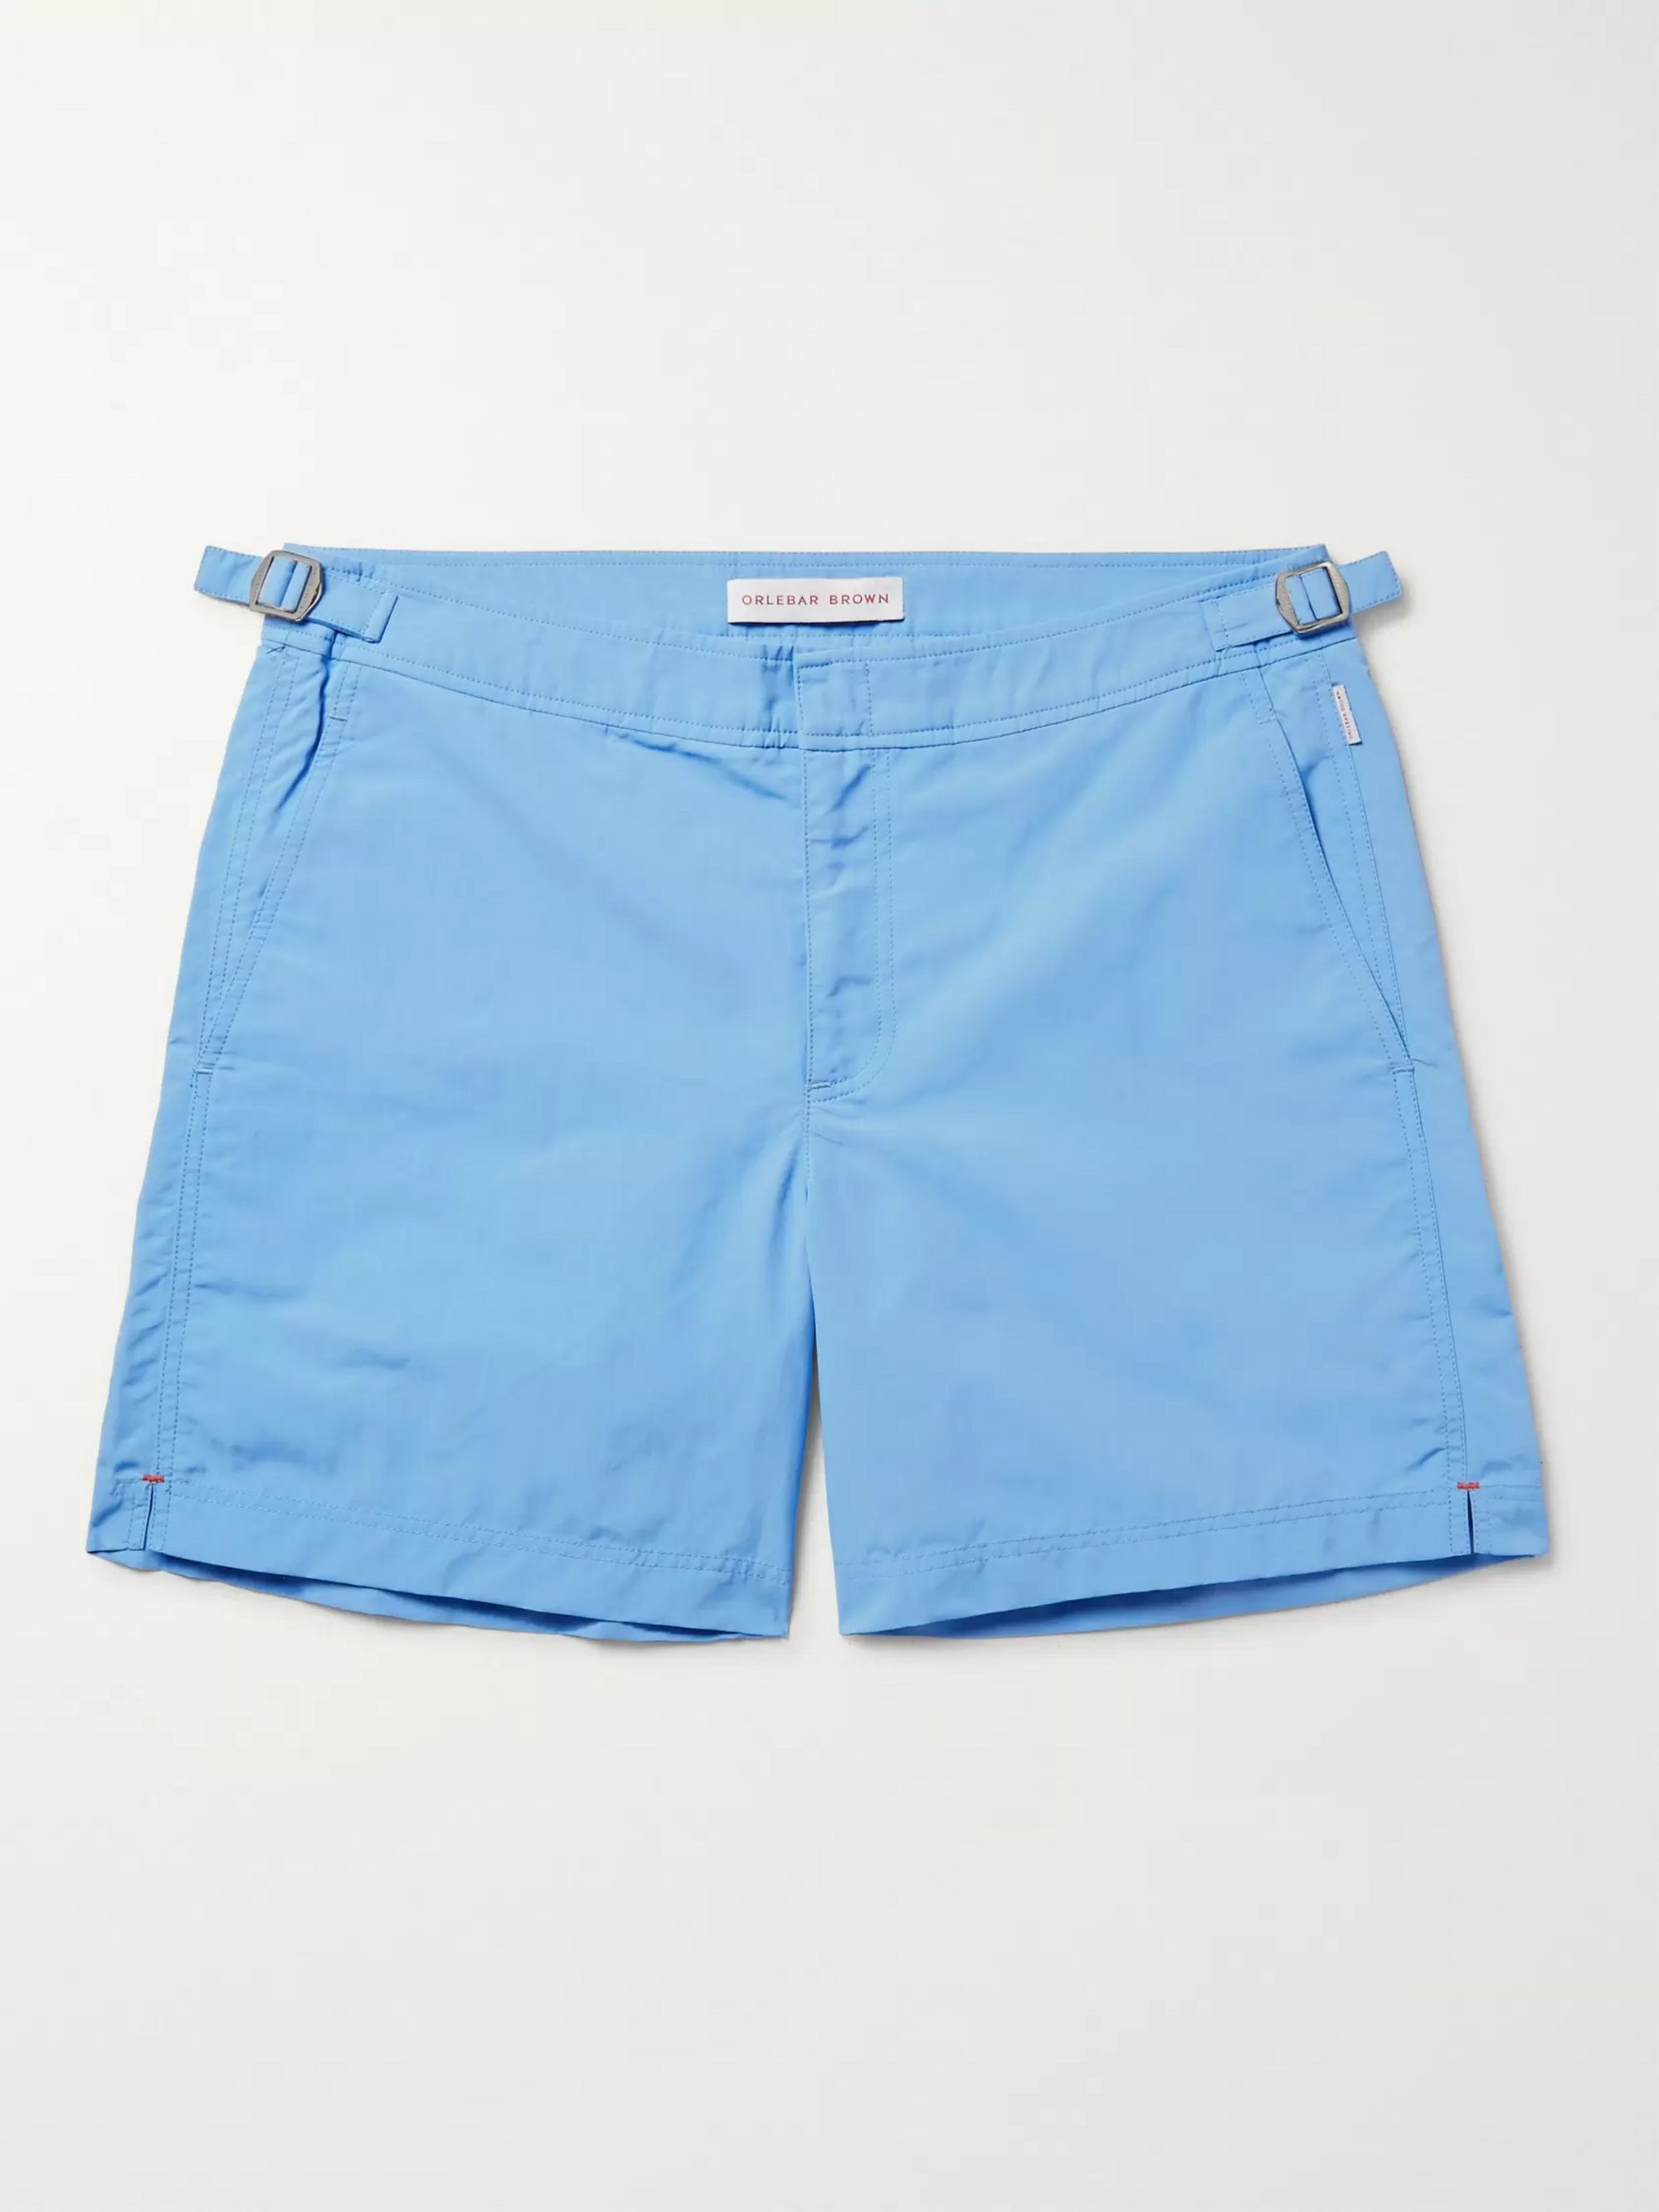 Light blue Bulldog Mid-Length Swim Shorts | ORLEBAR BROWN | MR PORTER